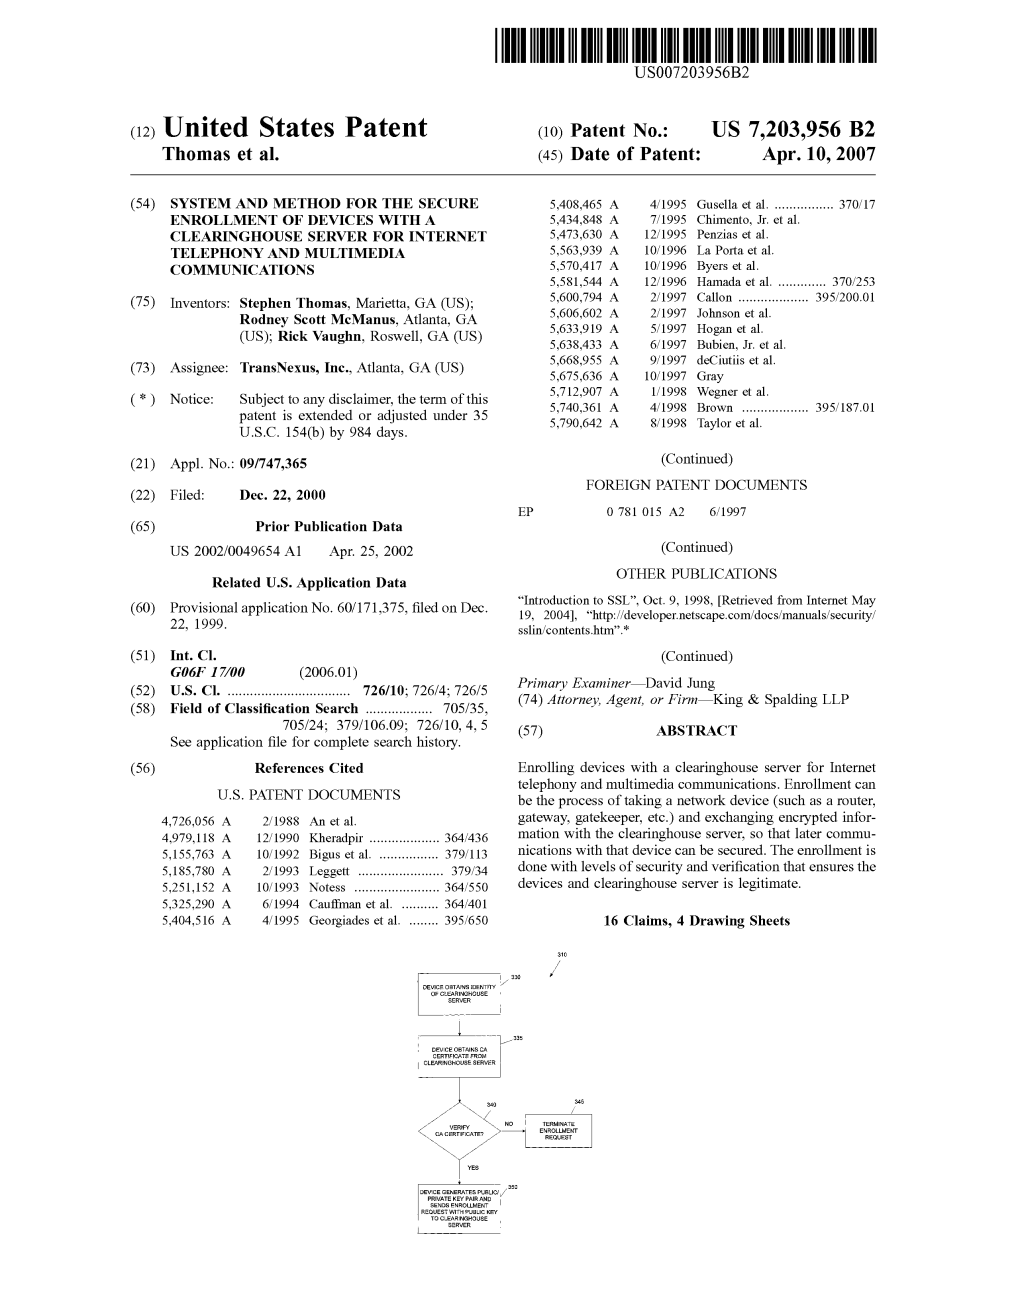 (12) United States Patent (10) Patent No.: US 7,203,956 B2 Thomas Et Al